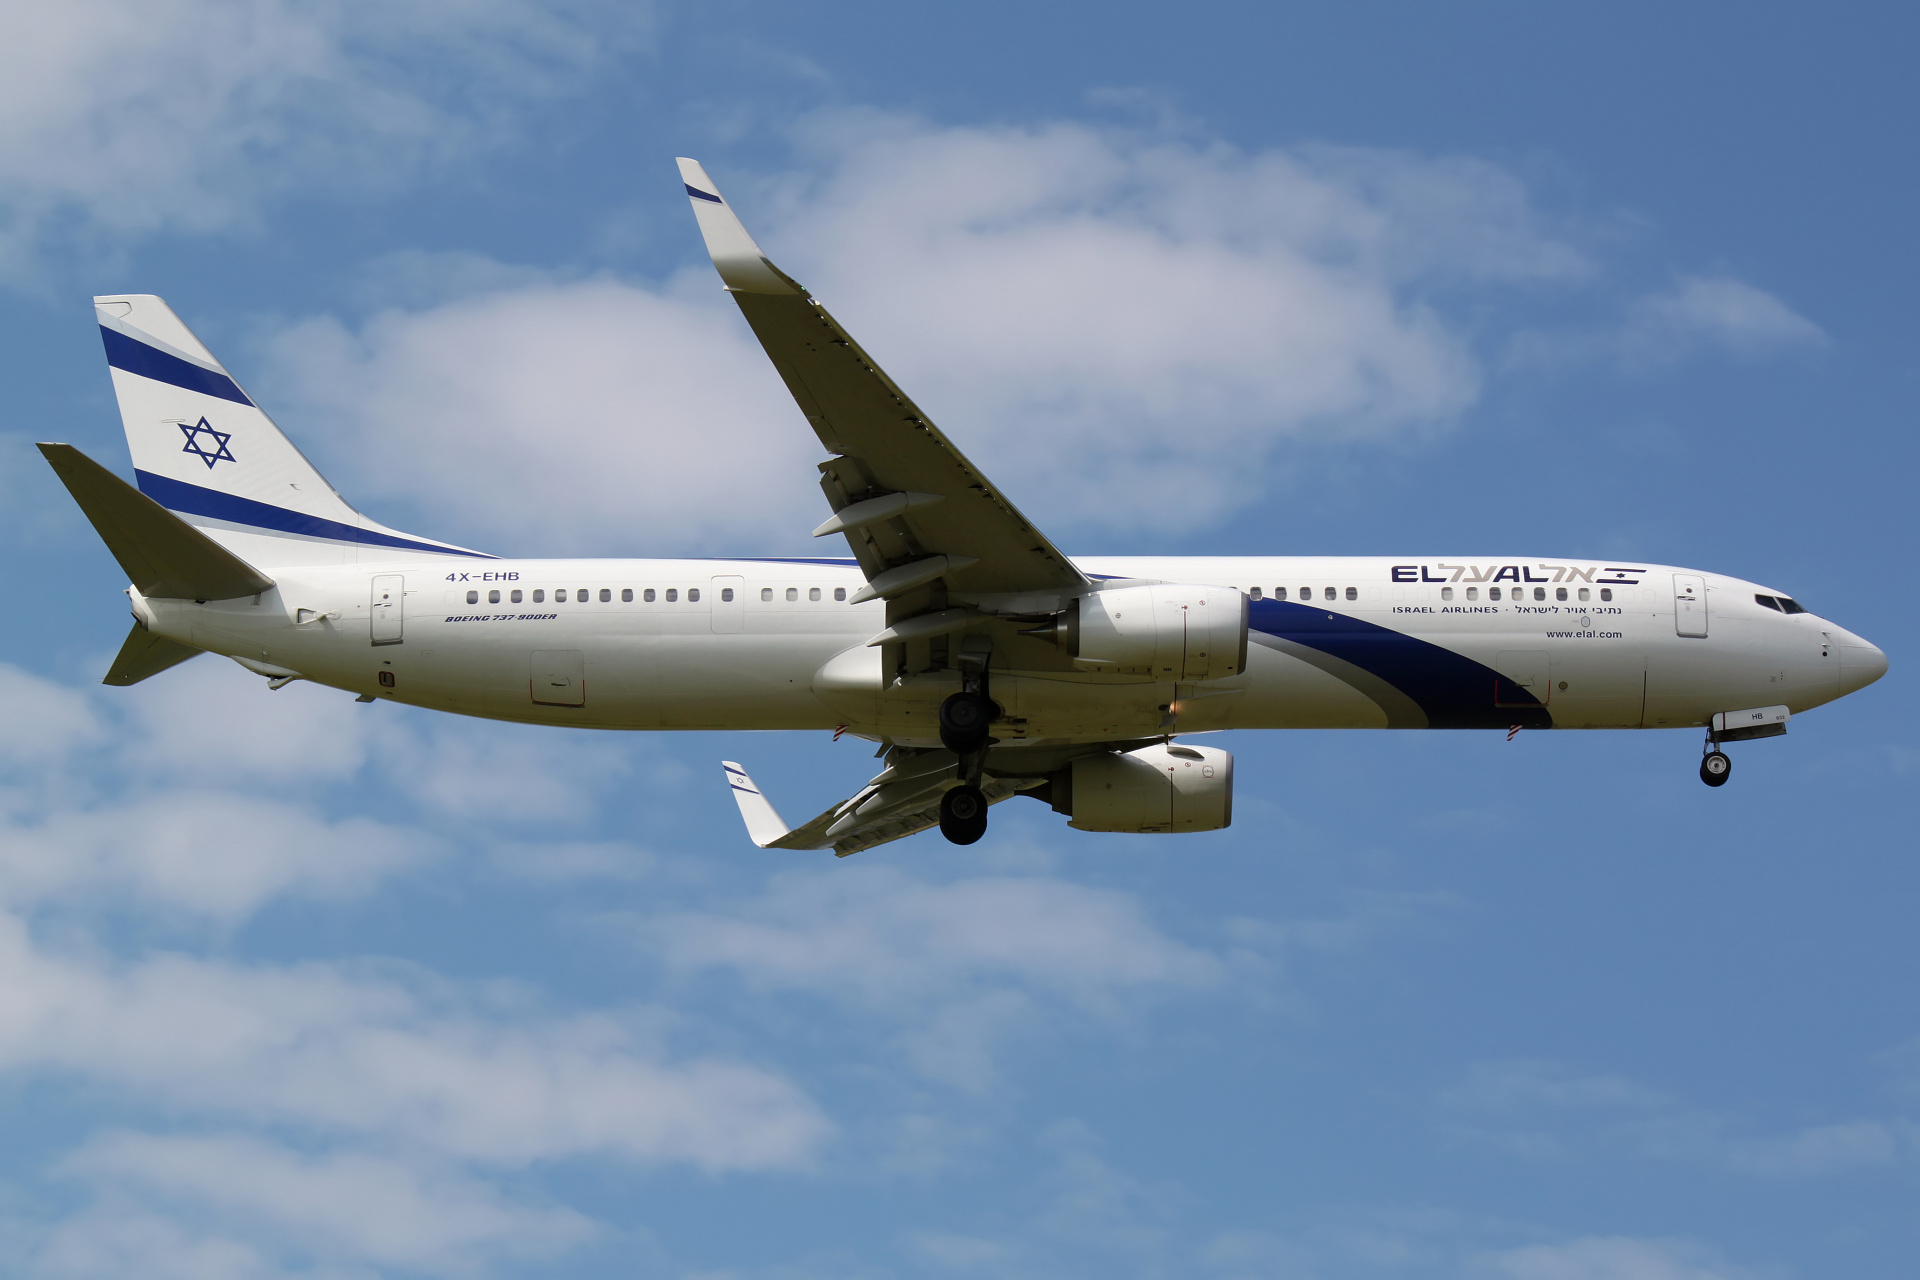 ER, 4X-EHB, El Al Israel Airlines (Aircraft » EPWA Spotting » Boeing 737-900)